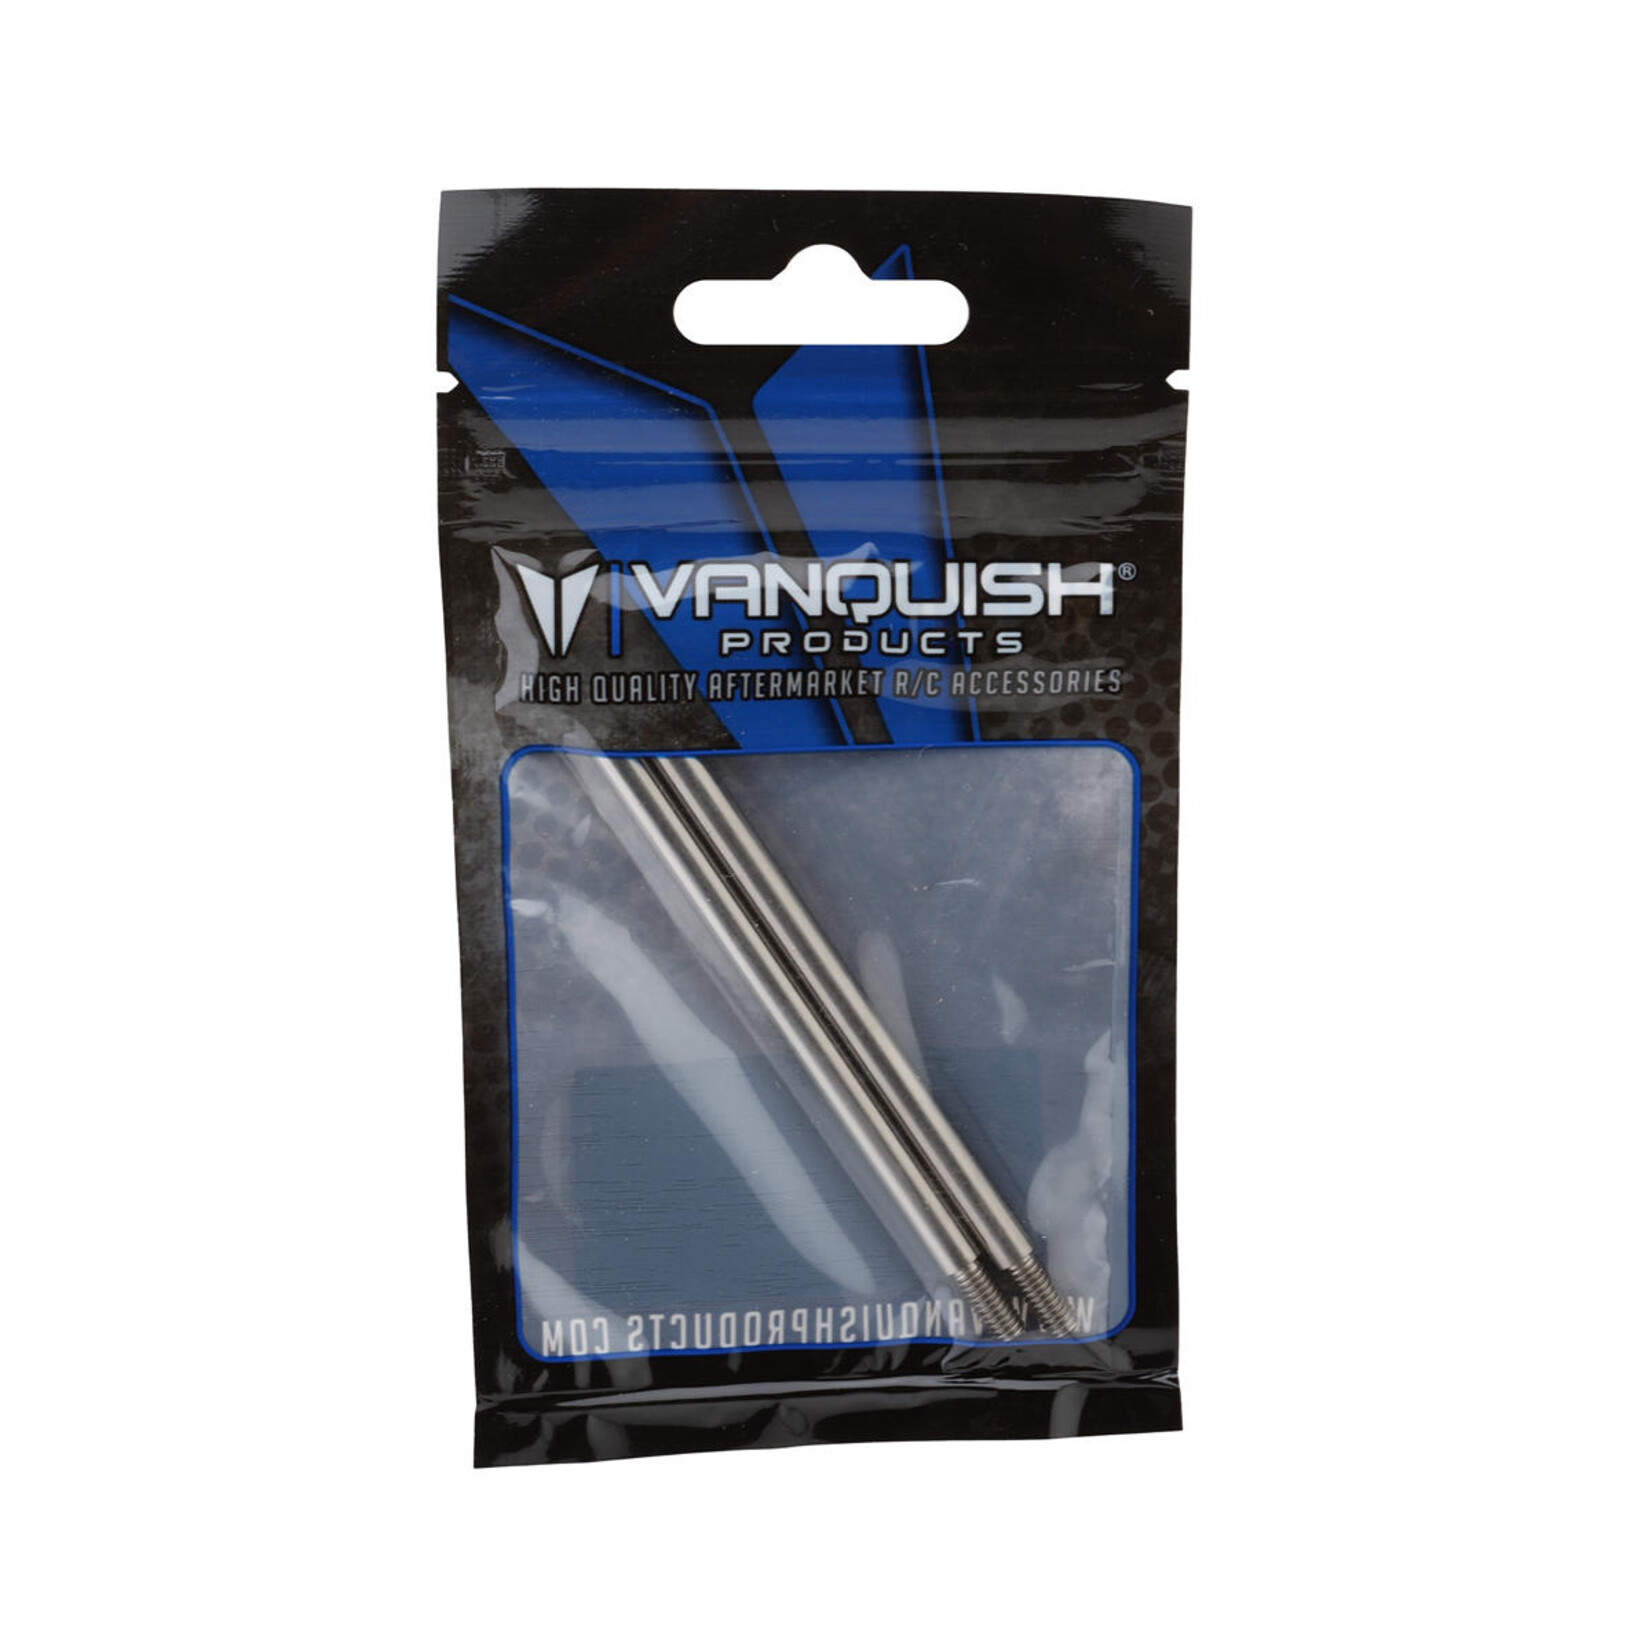 Vanquish Products Vanquish Products Titanium Builders Links (2) (90mm) #VPS30900